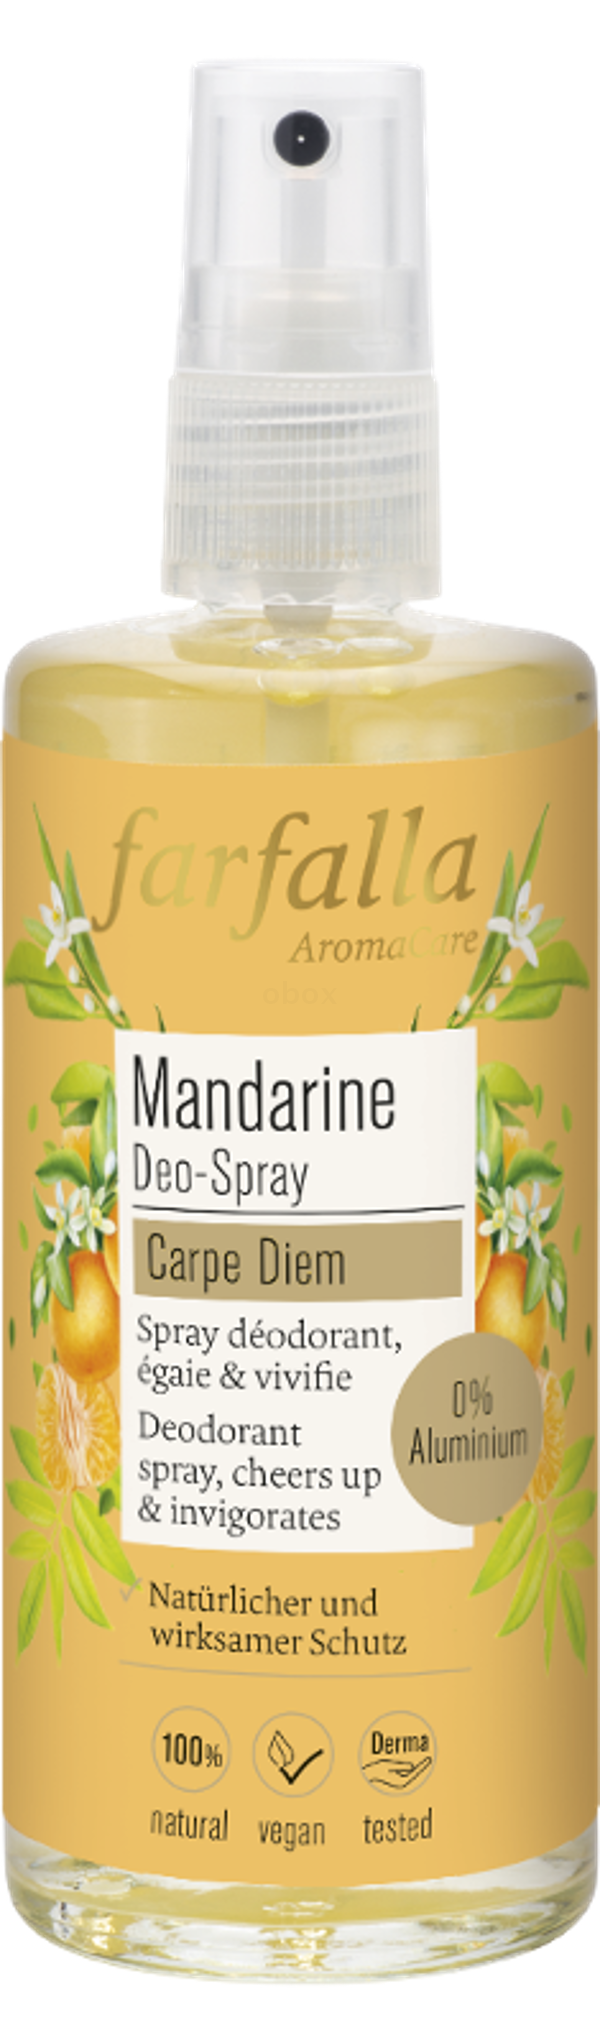 Produktfoto zu Mandarine Deo Spray